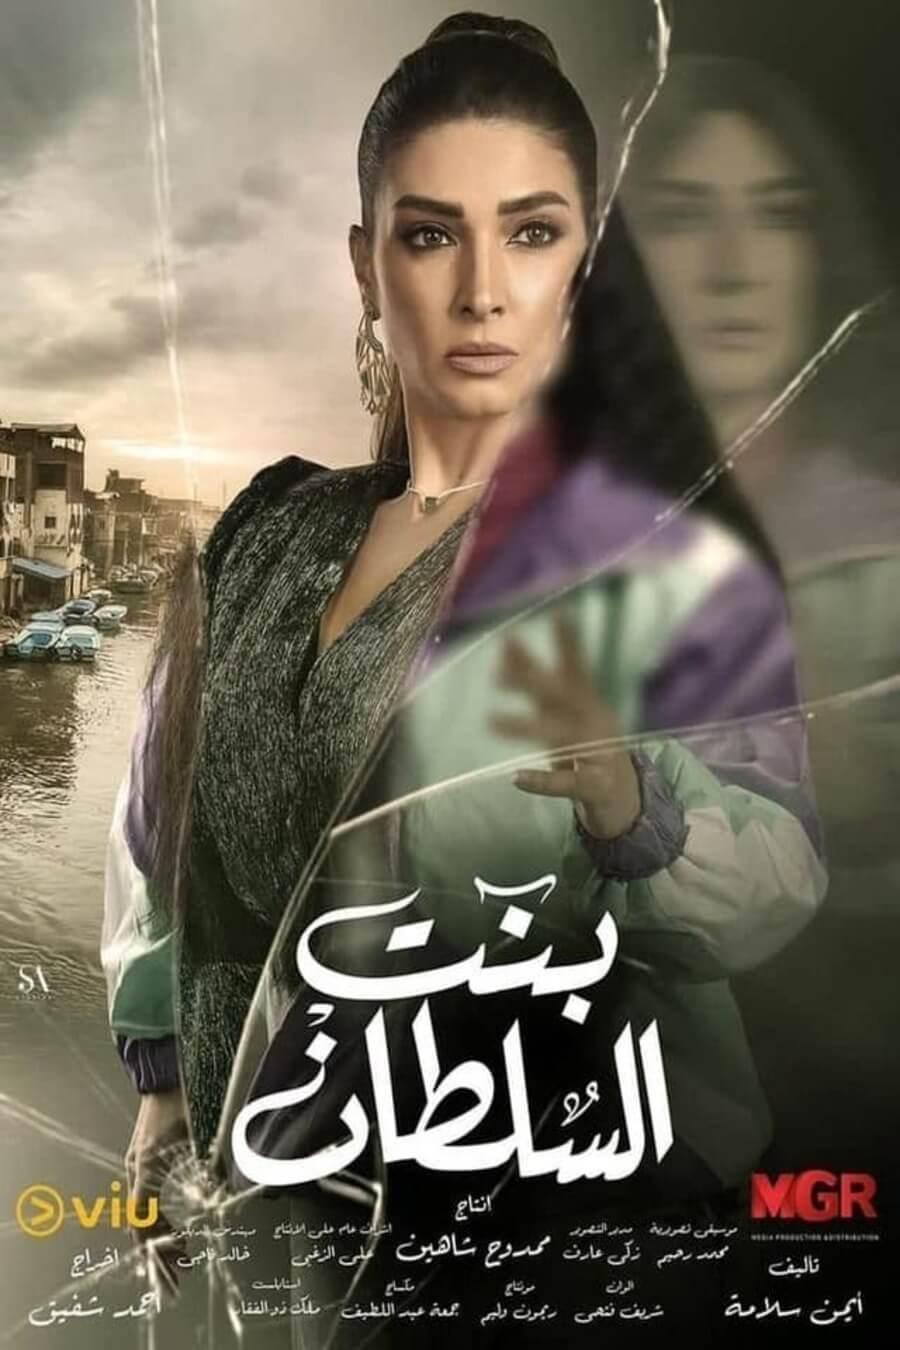 TV ratings for Bint El Sultan (بنت السلطان) in Sweden. viu TV series